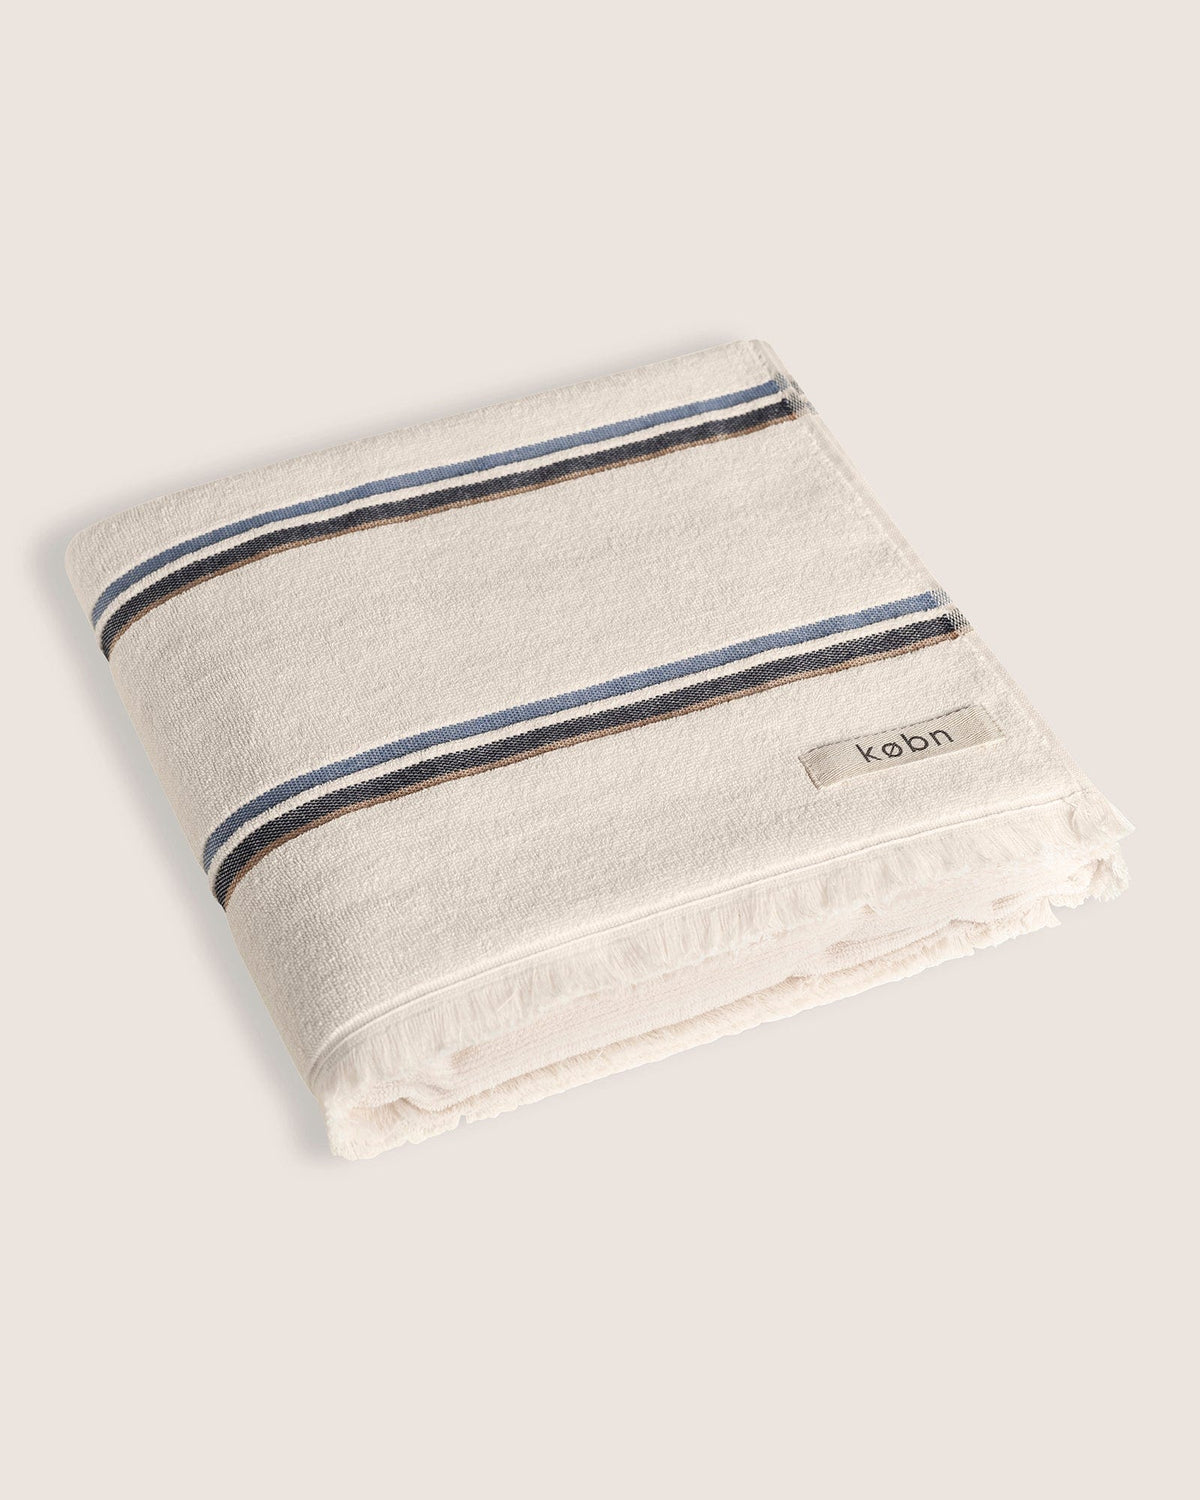 Købn Ecru Towel